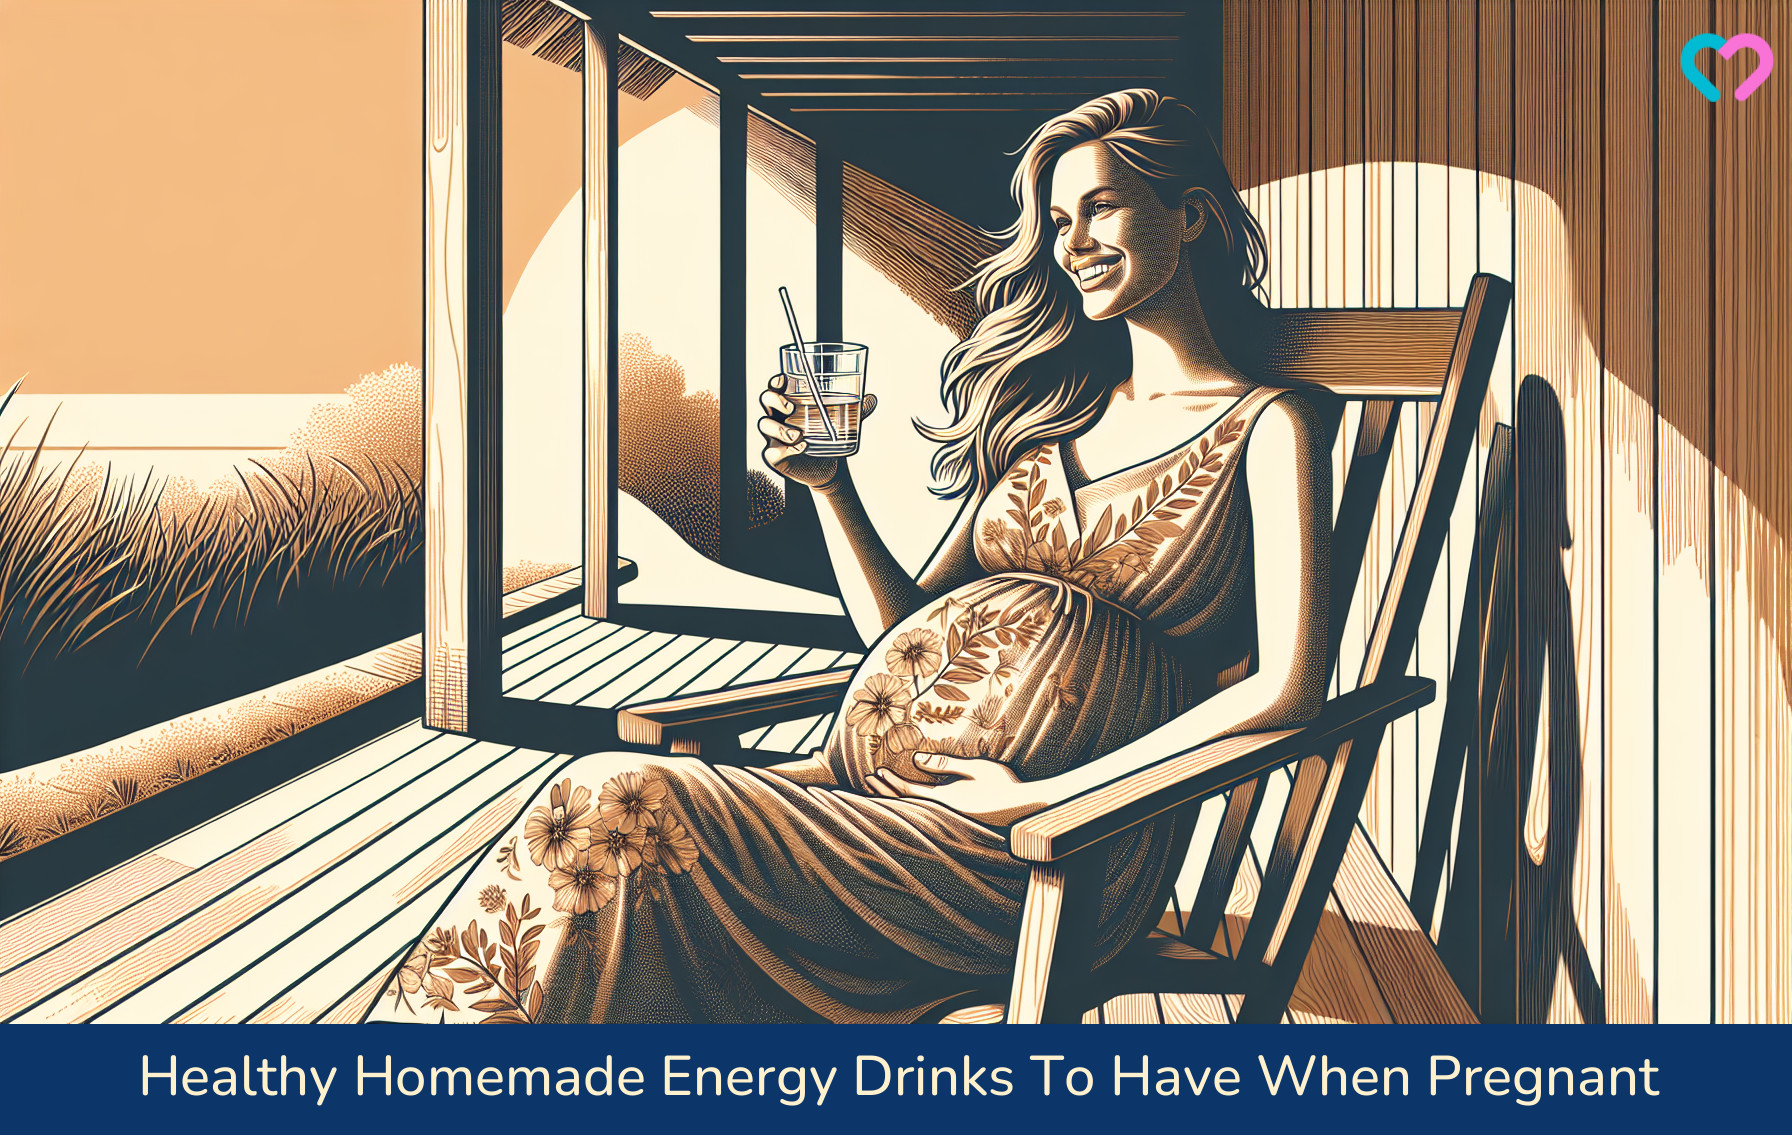 energy drinks while pregnant_illustration